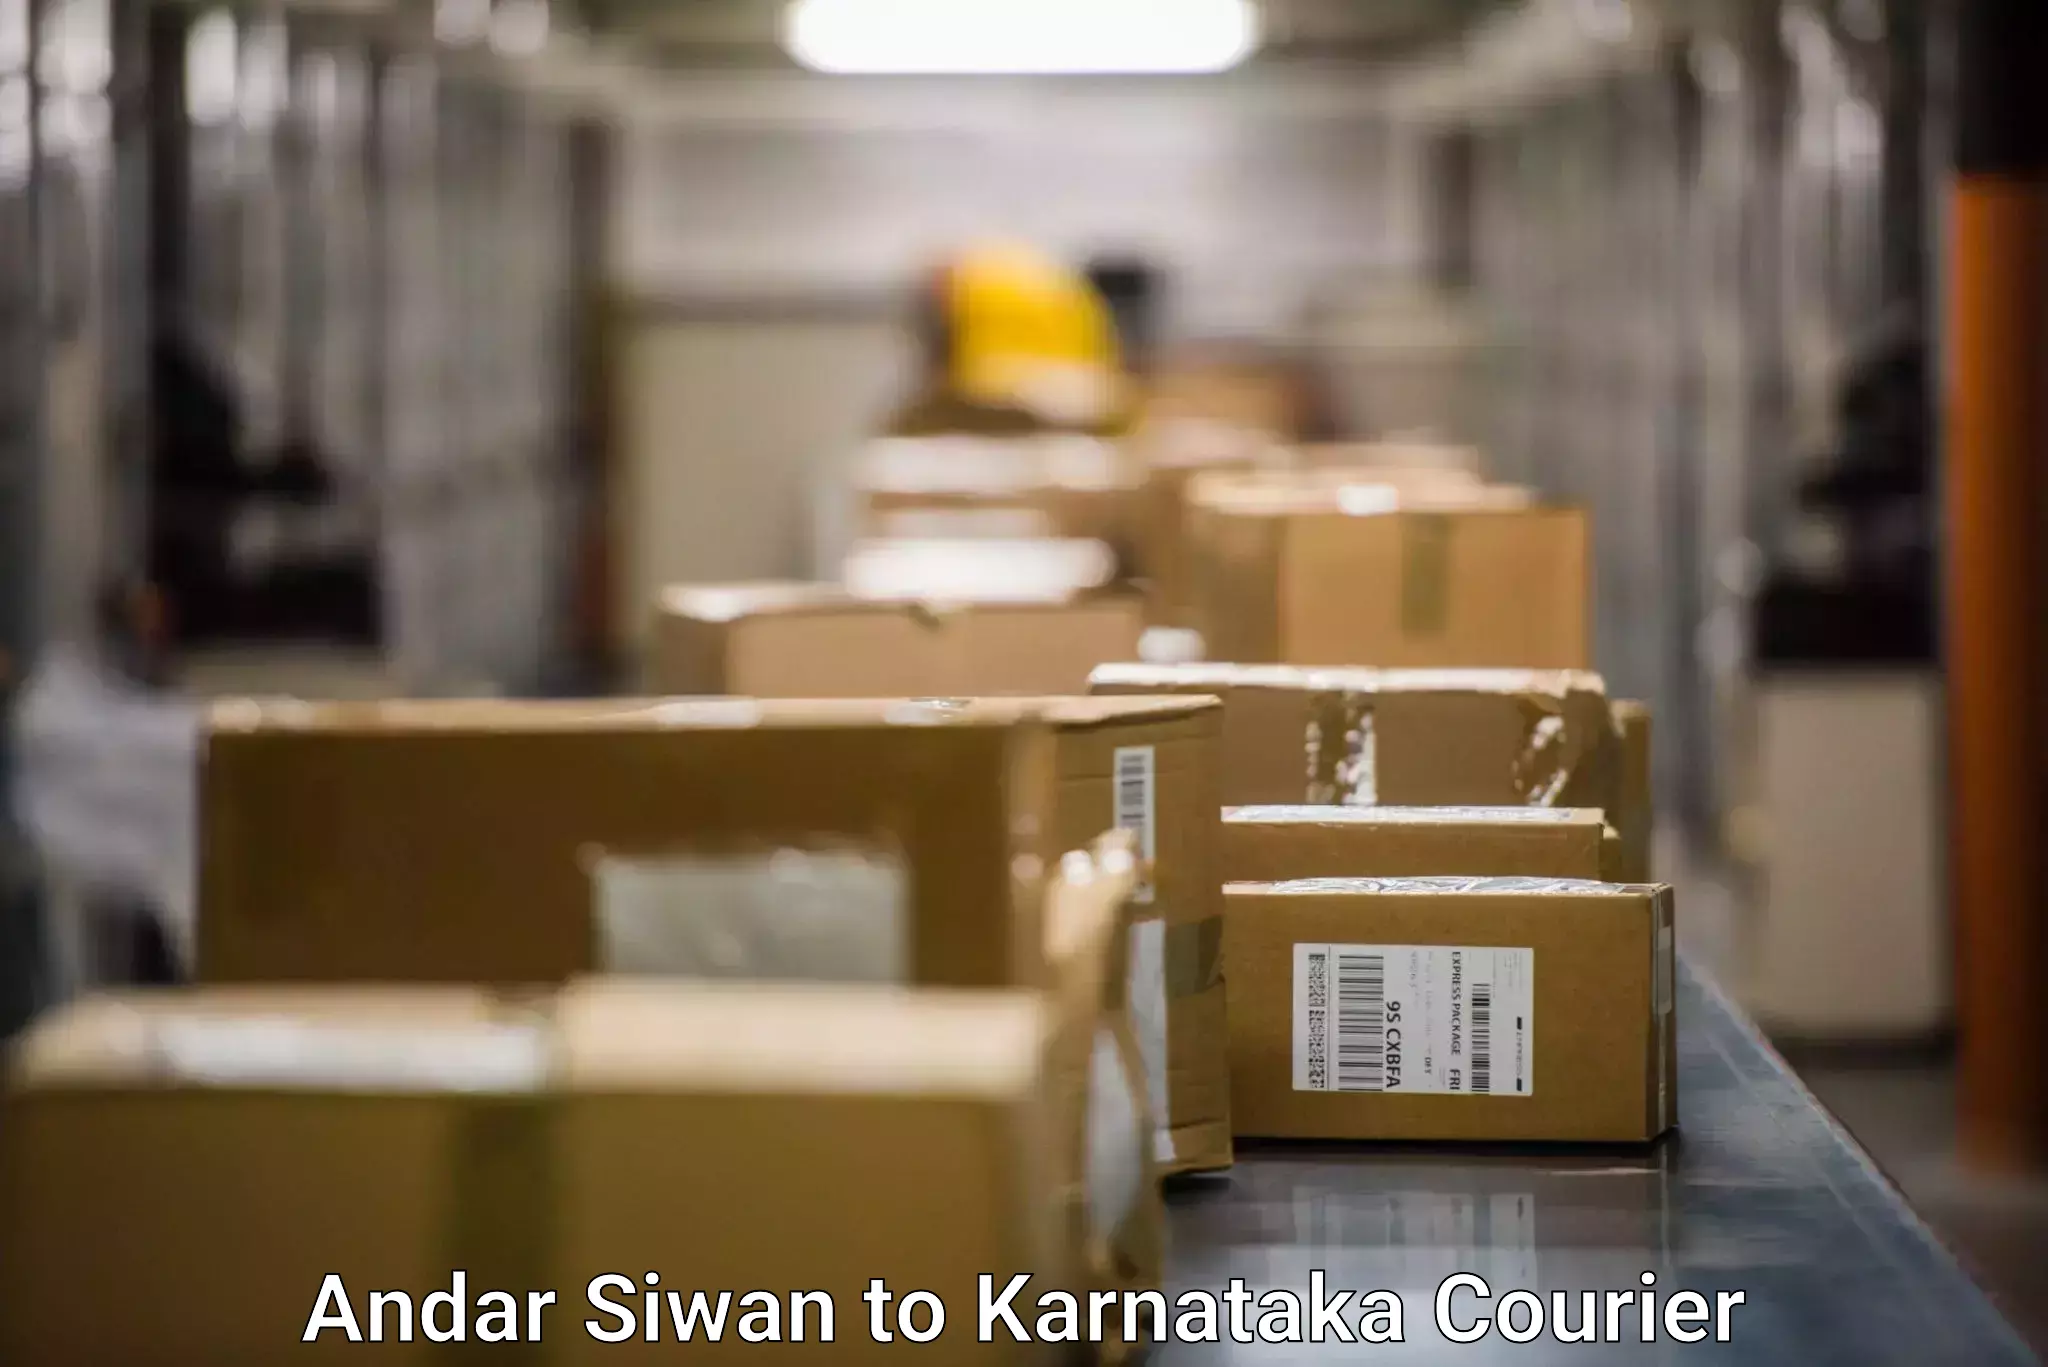 Express delivery solutions Andar Siwan to Karnataka